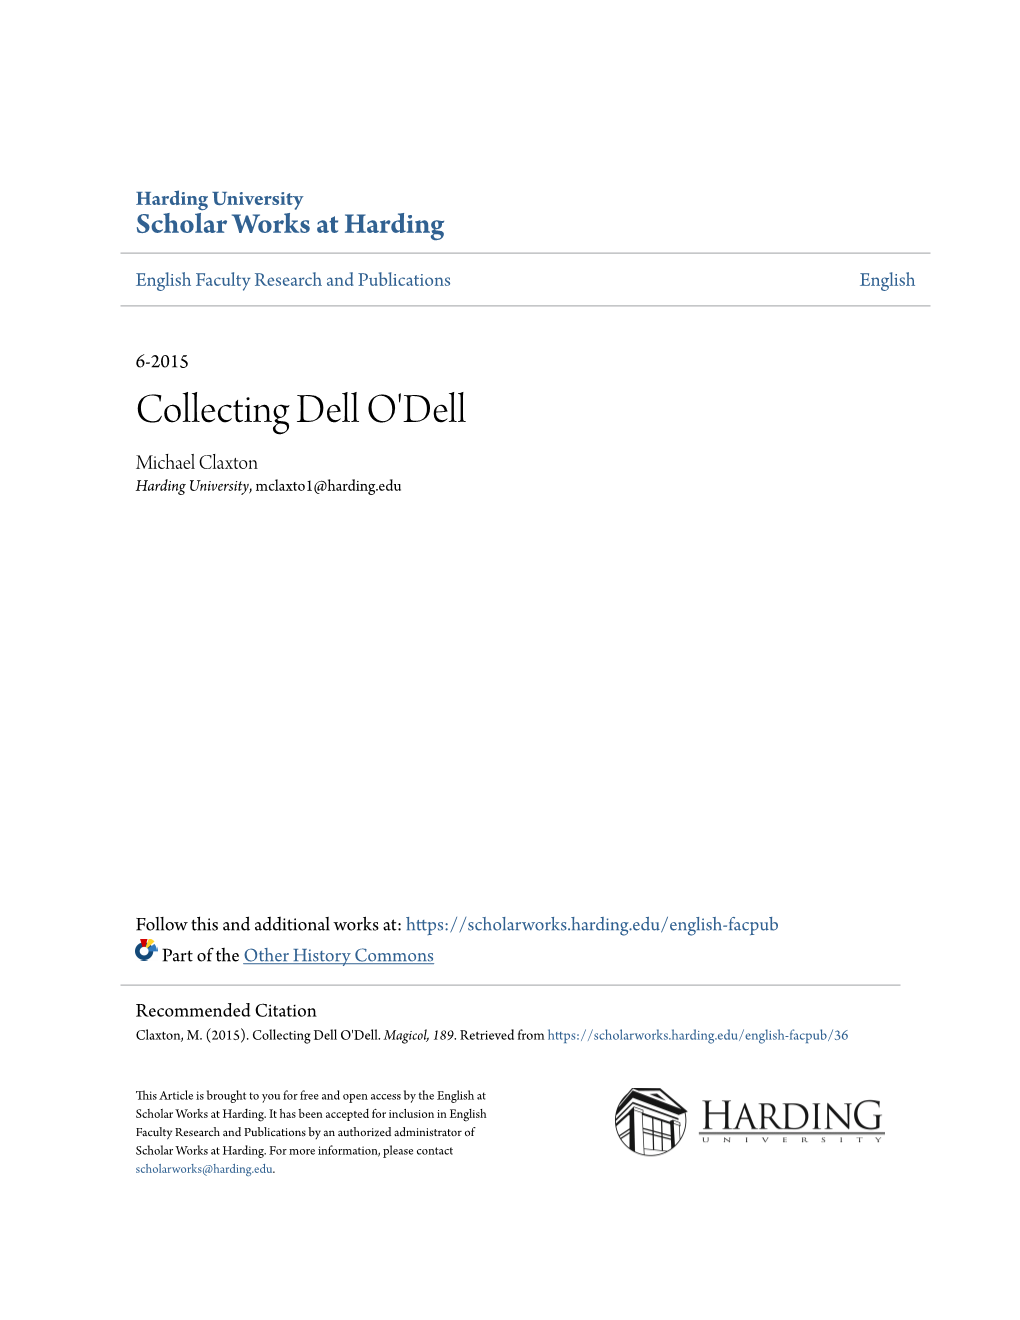 Collecting Dell O'dell Michael Claxton Harding University, Mclaxto1@Harding.Edu